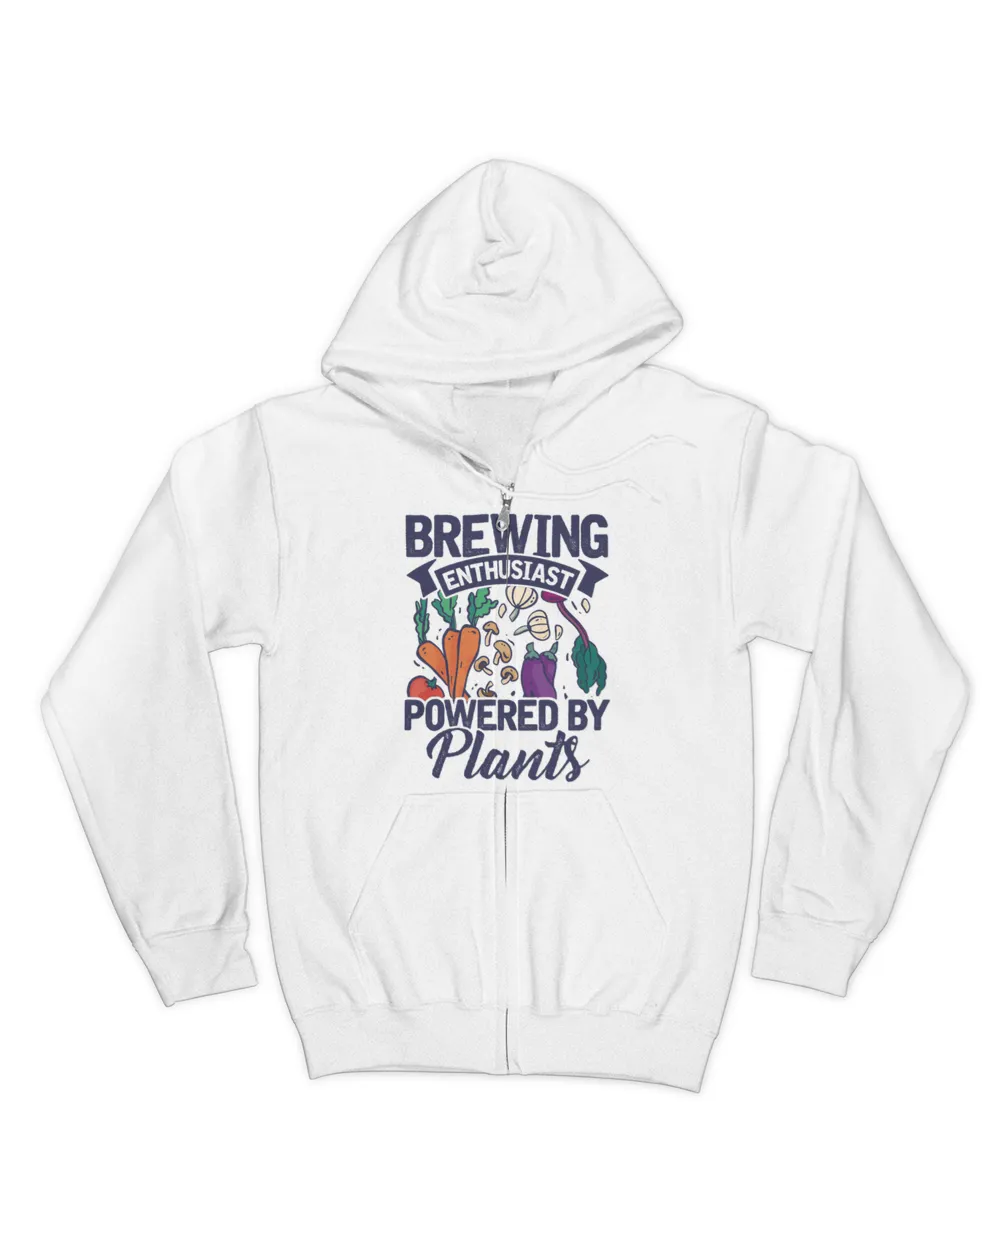 Brewing Enthusiast Powered By Beer Homebrewing Craftbeer Hop